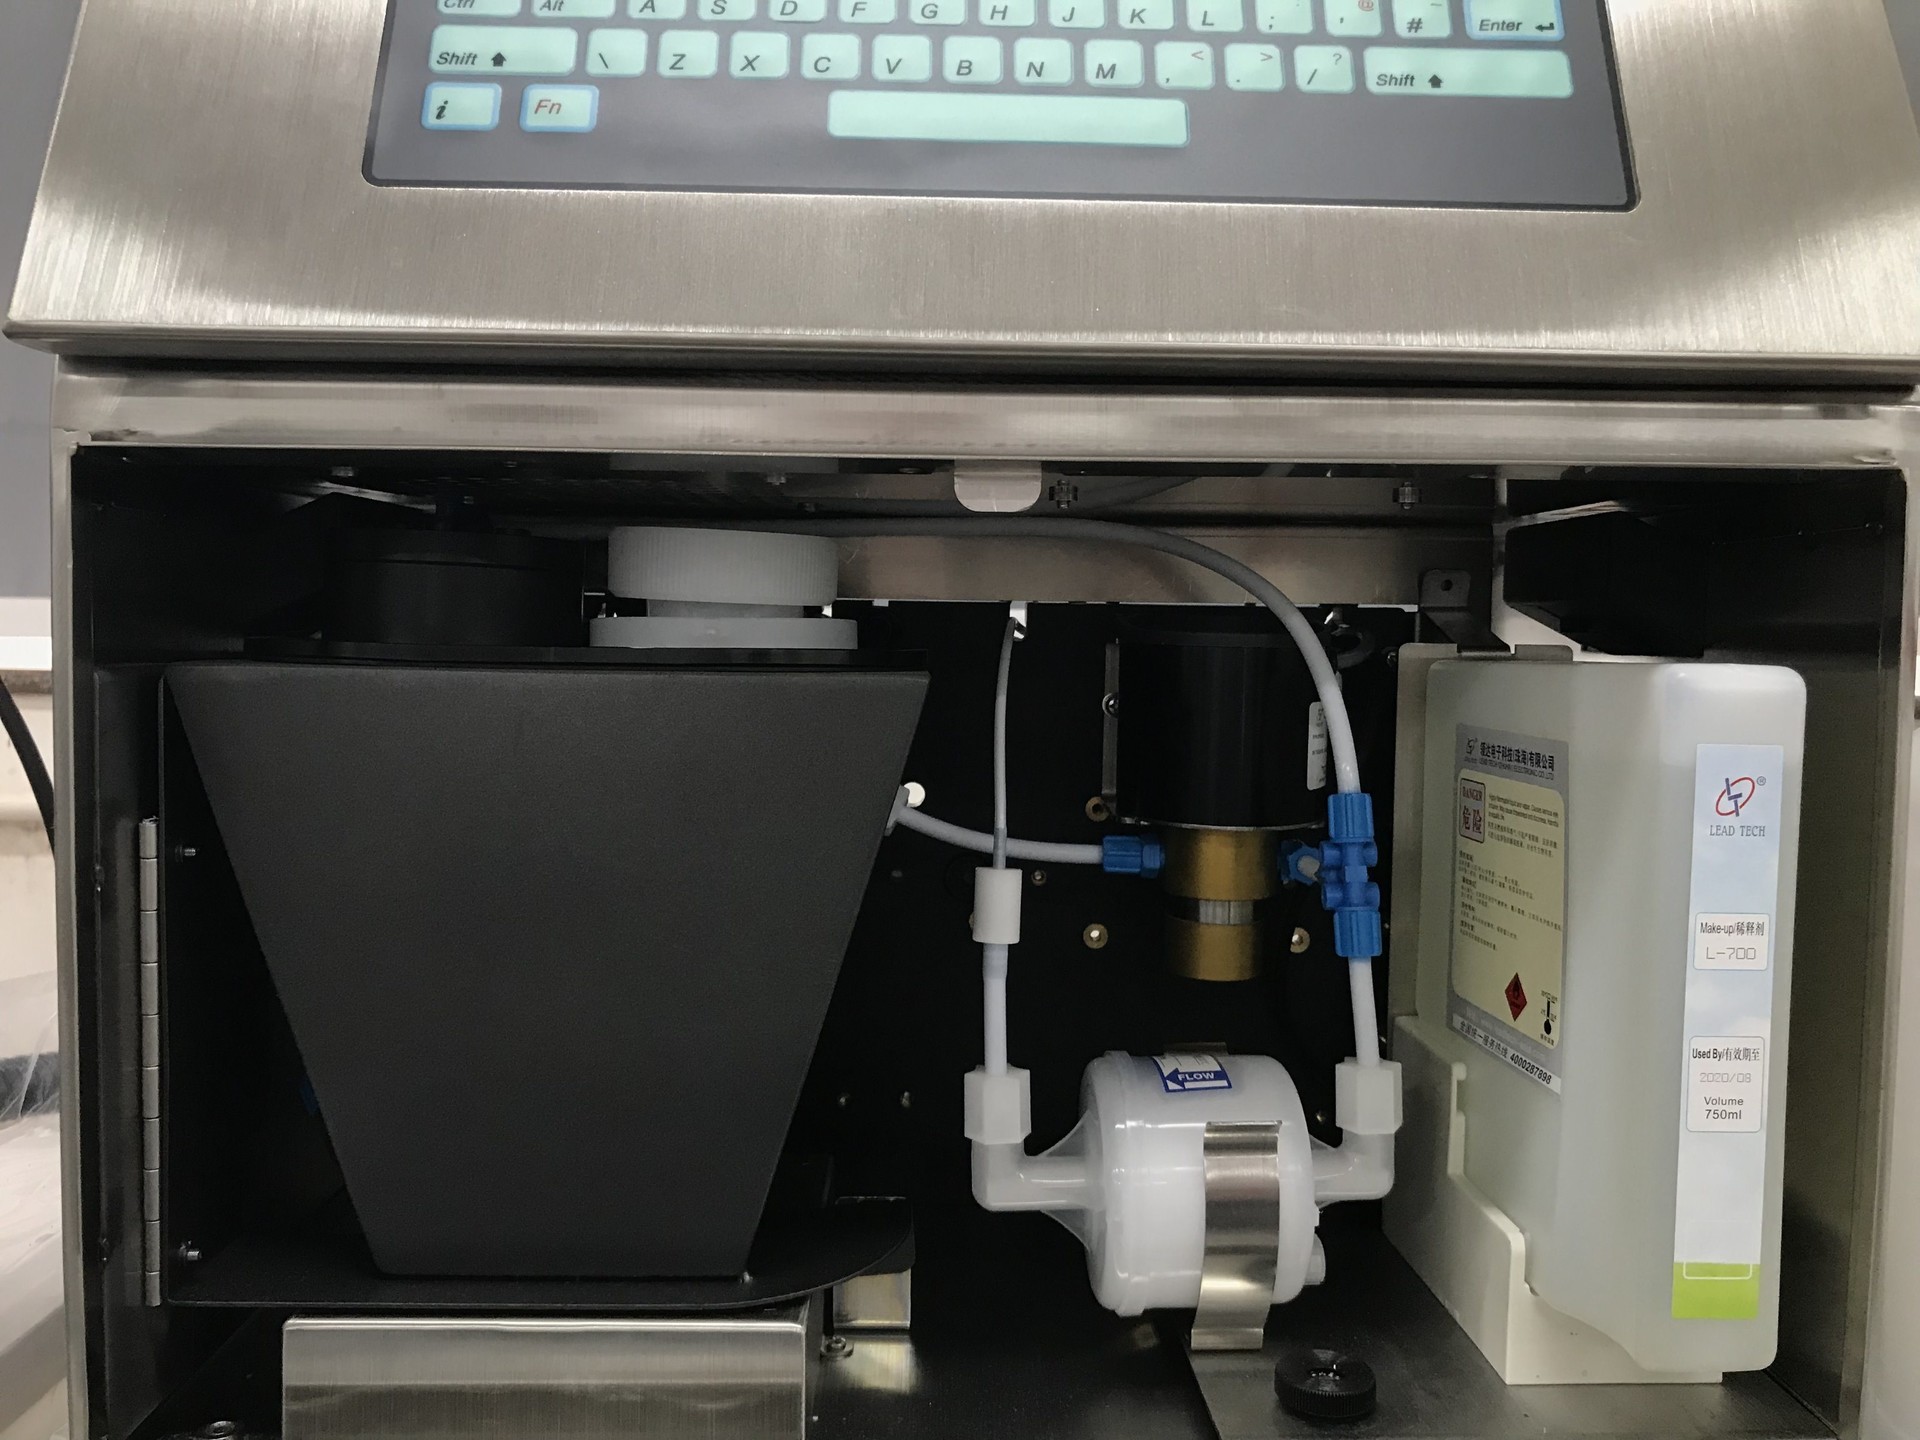 Lead Tech Lt1000s+ Moving Head Printing Cij Inkjet Printer